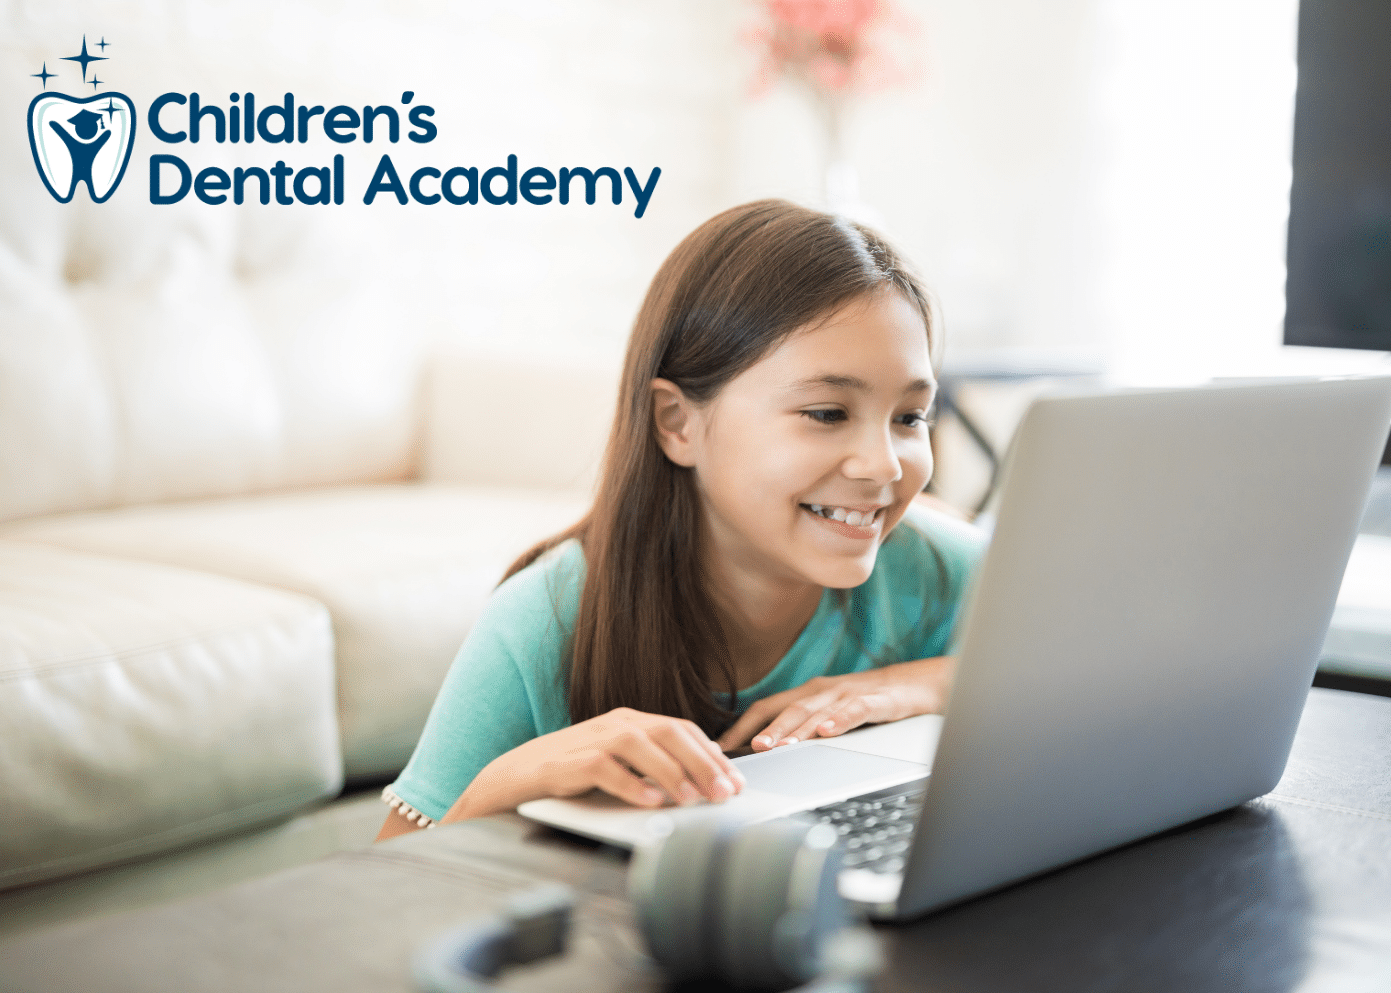 children's dental academy activity girl on computer